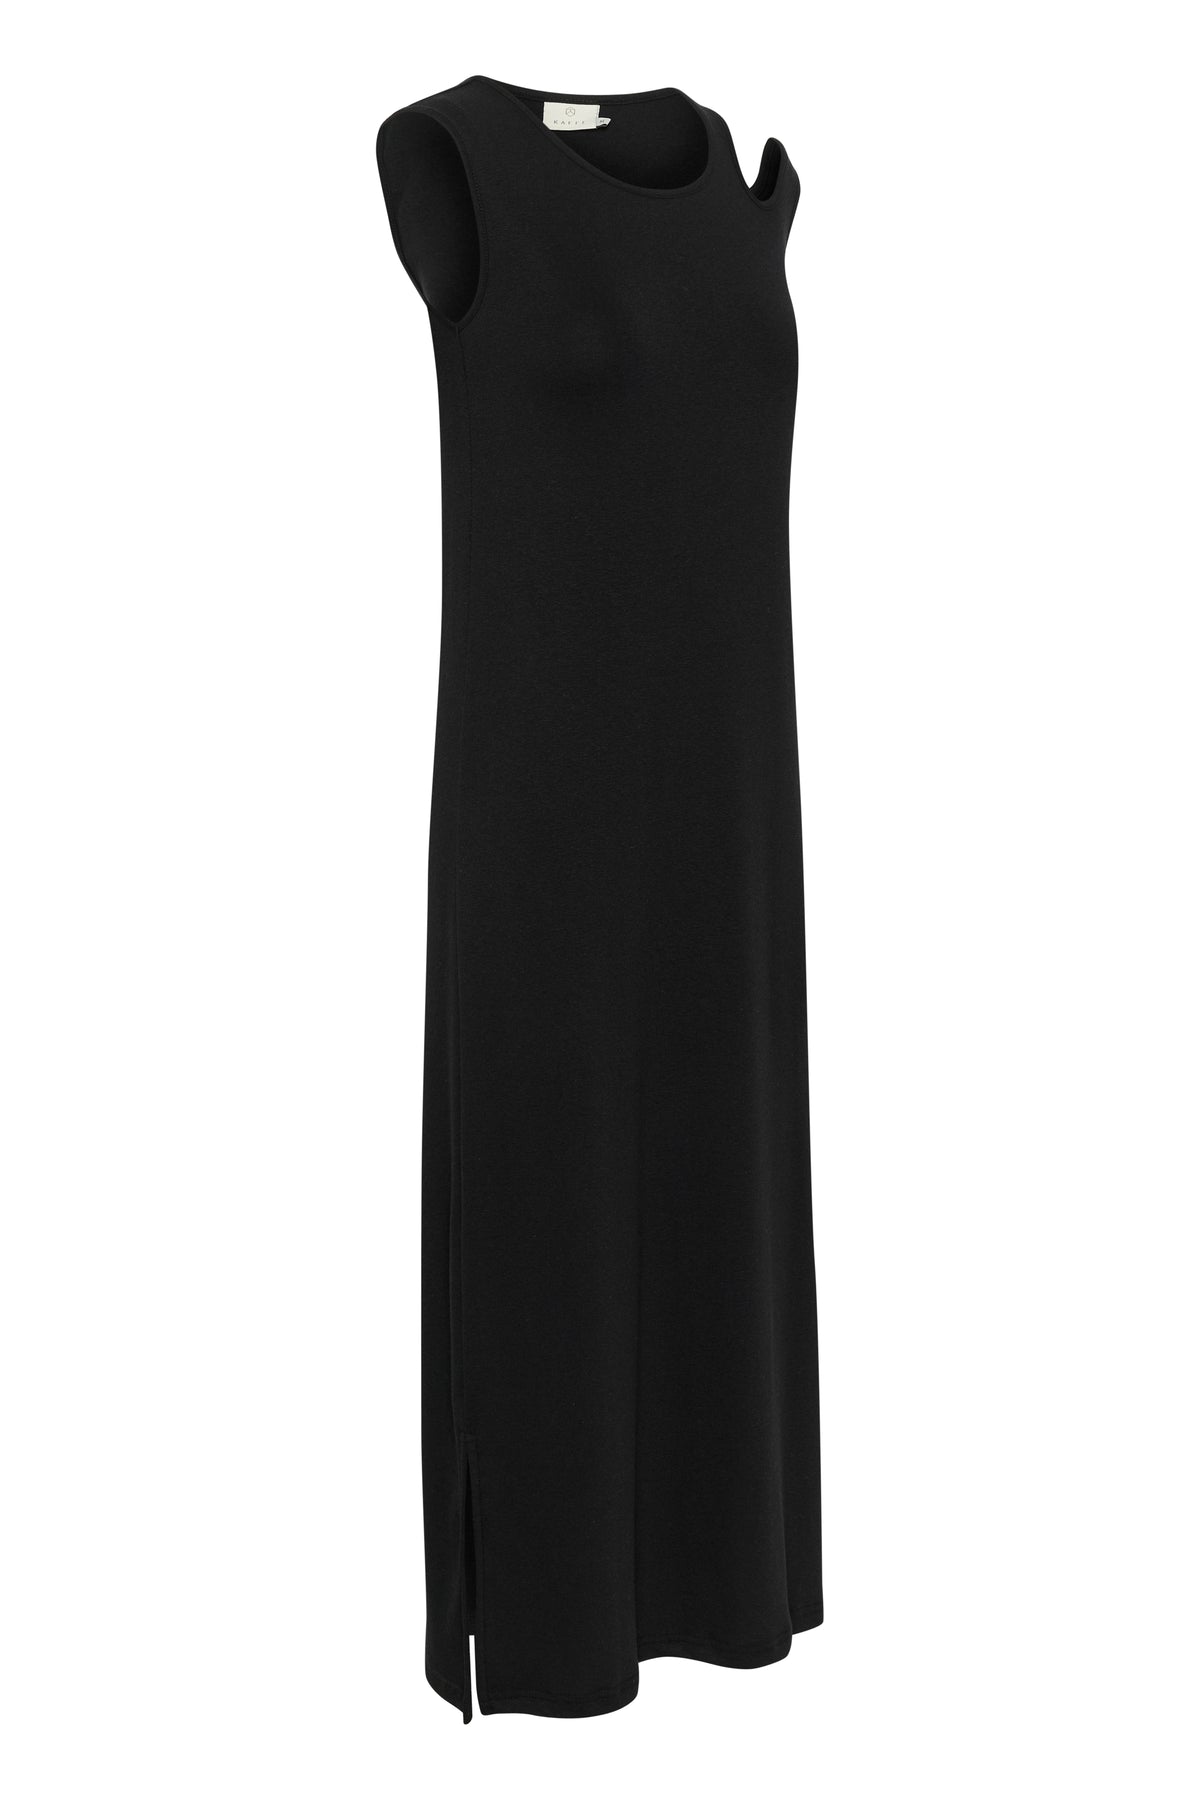 Kaffe Kaarka Black Fitted Midi Dress, 10508714